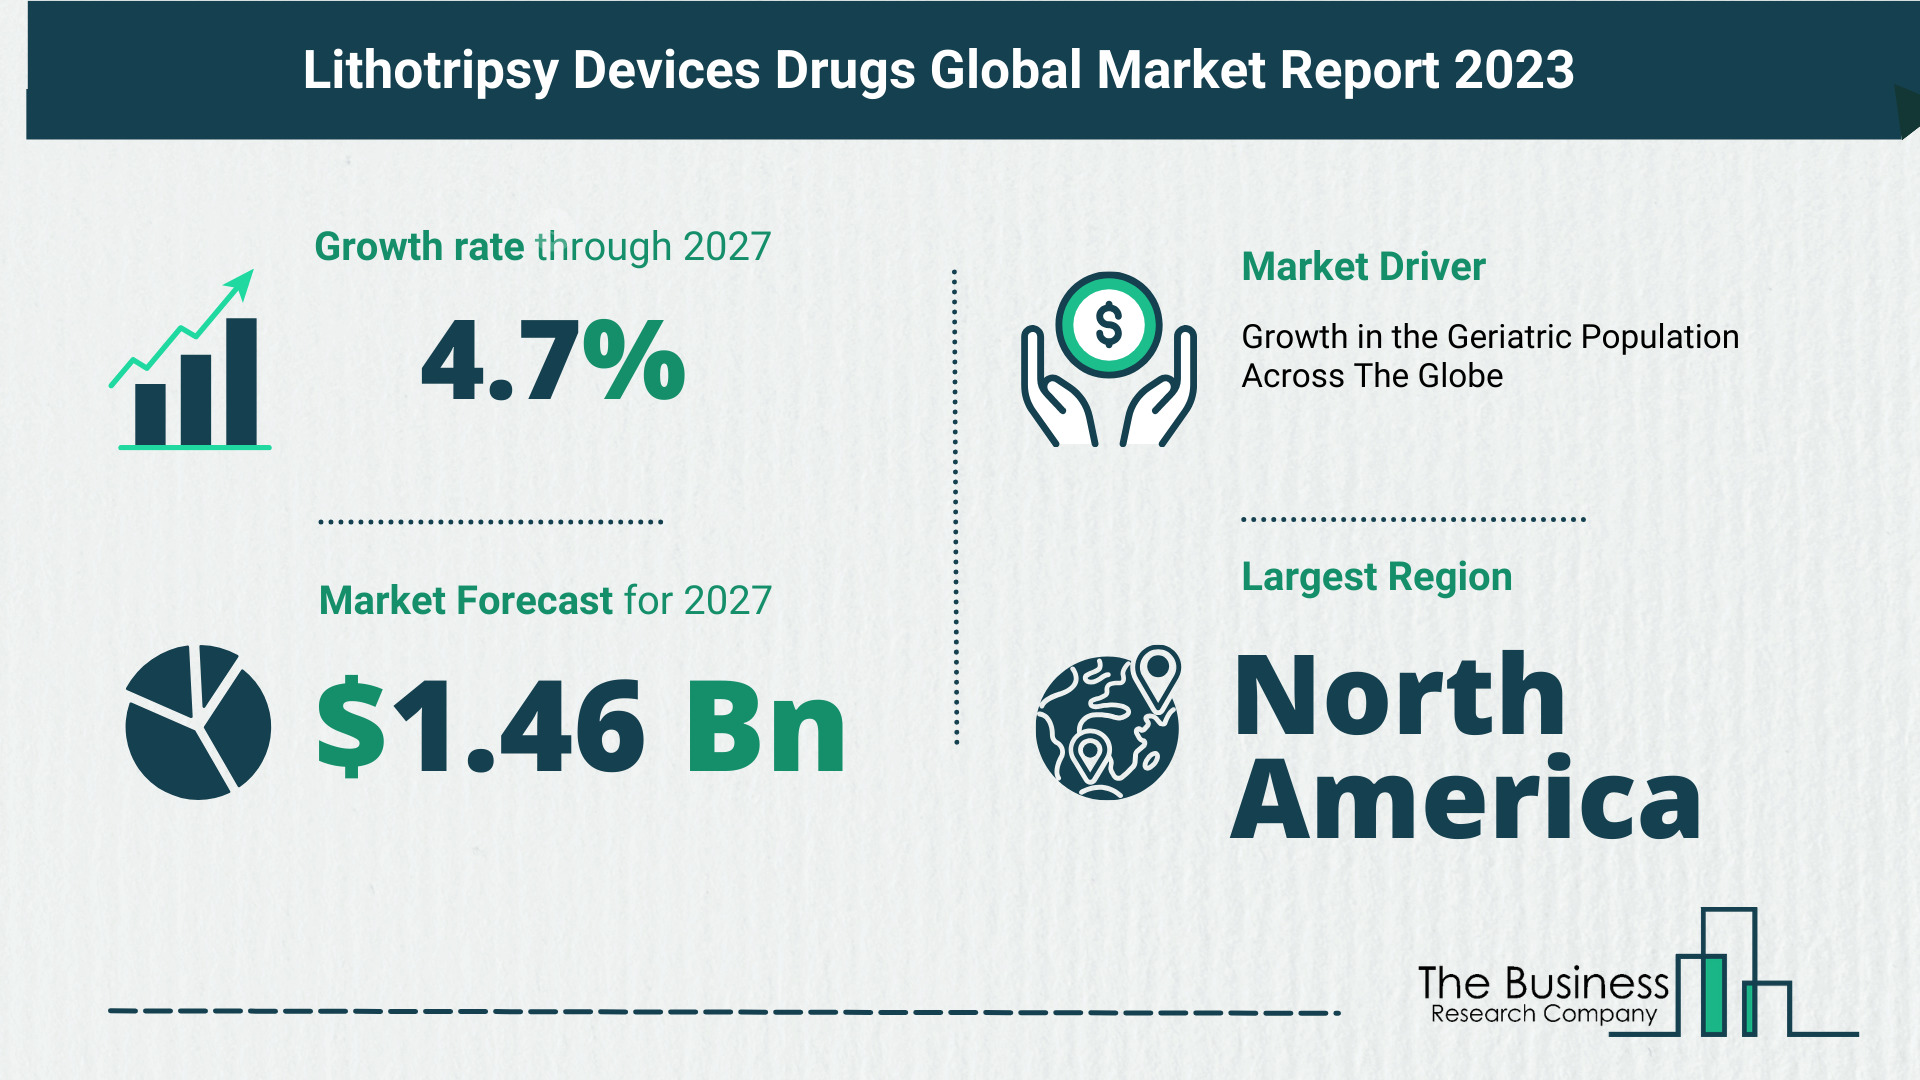 Lithotripsy Devices Market Forecast 2023: Forecast Market Size, Drivers And Key Segments